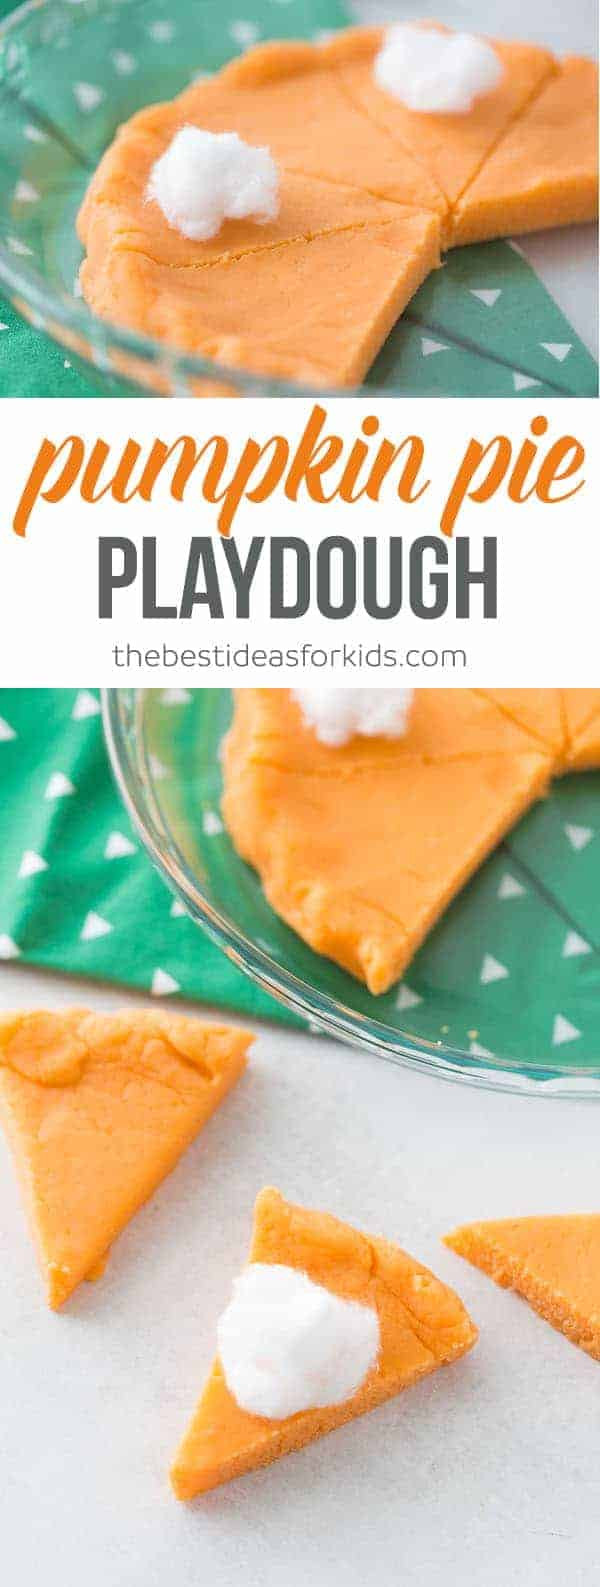 Pumpkin Pie Recipes For Kids
 The Best Pumpkin Pie Recipes and More